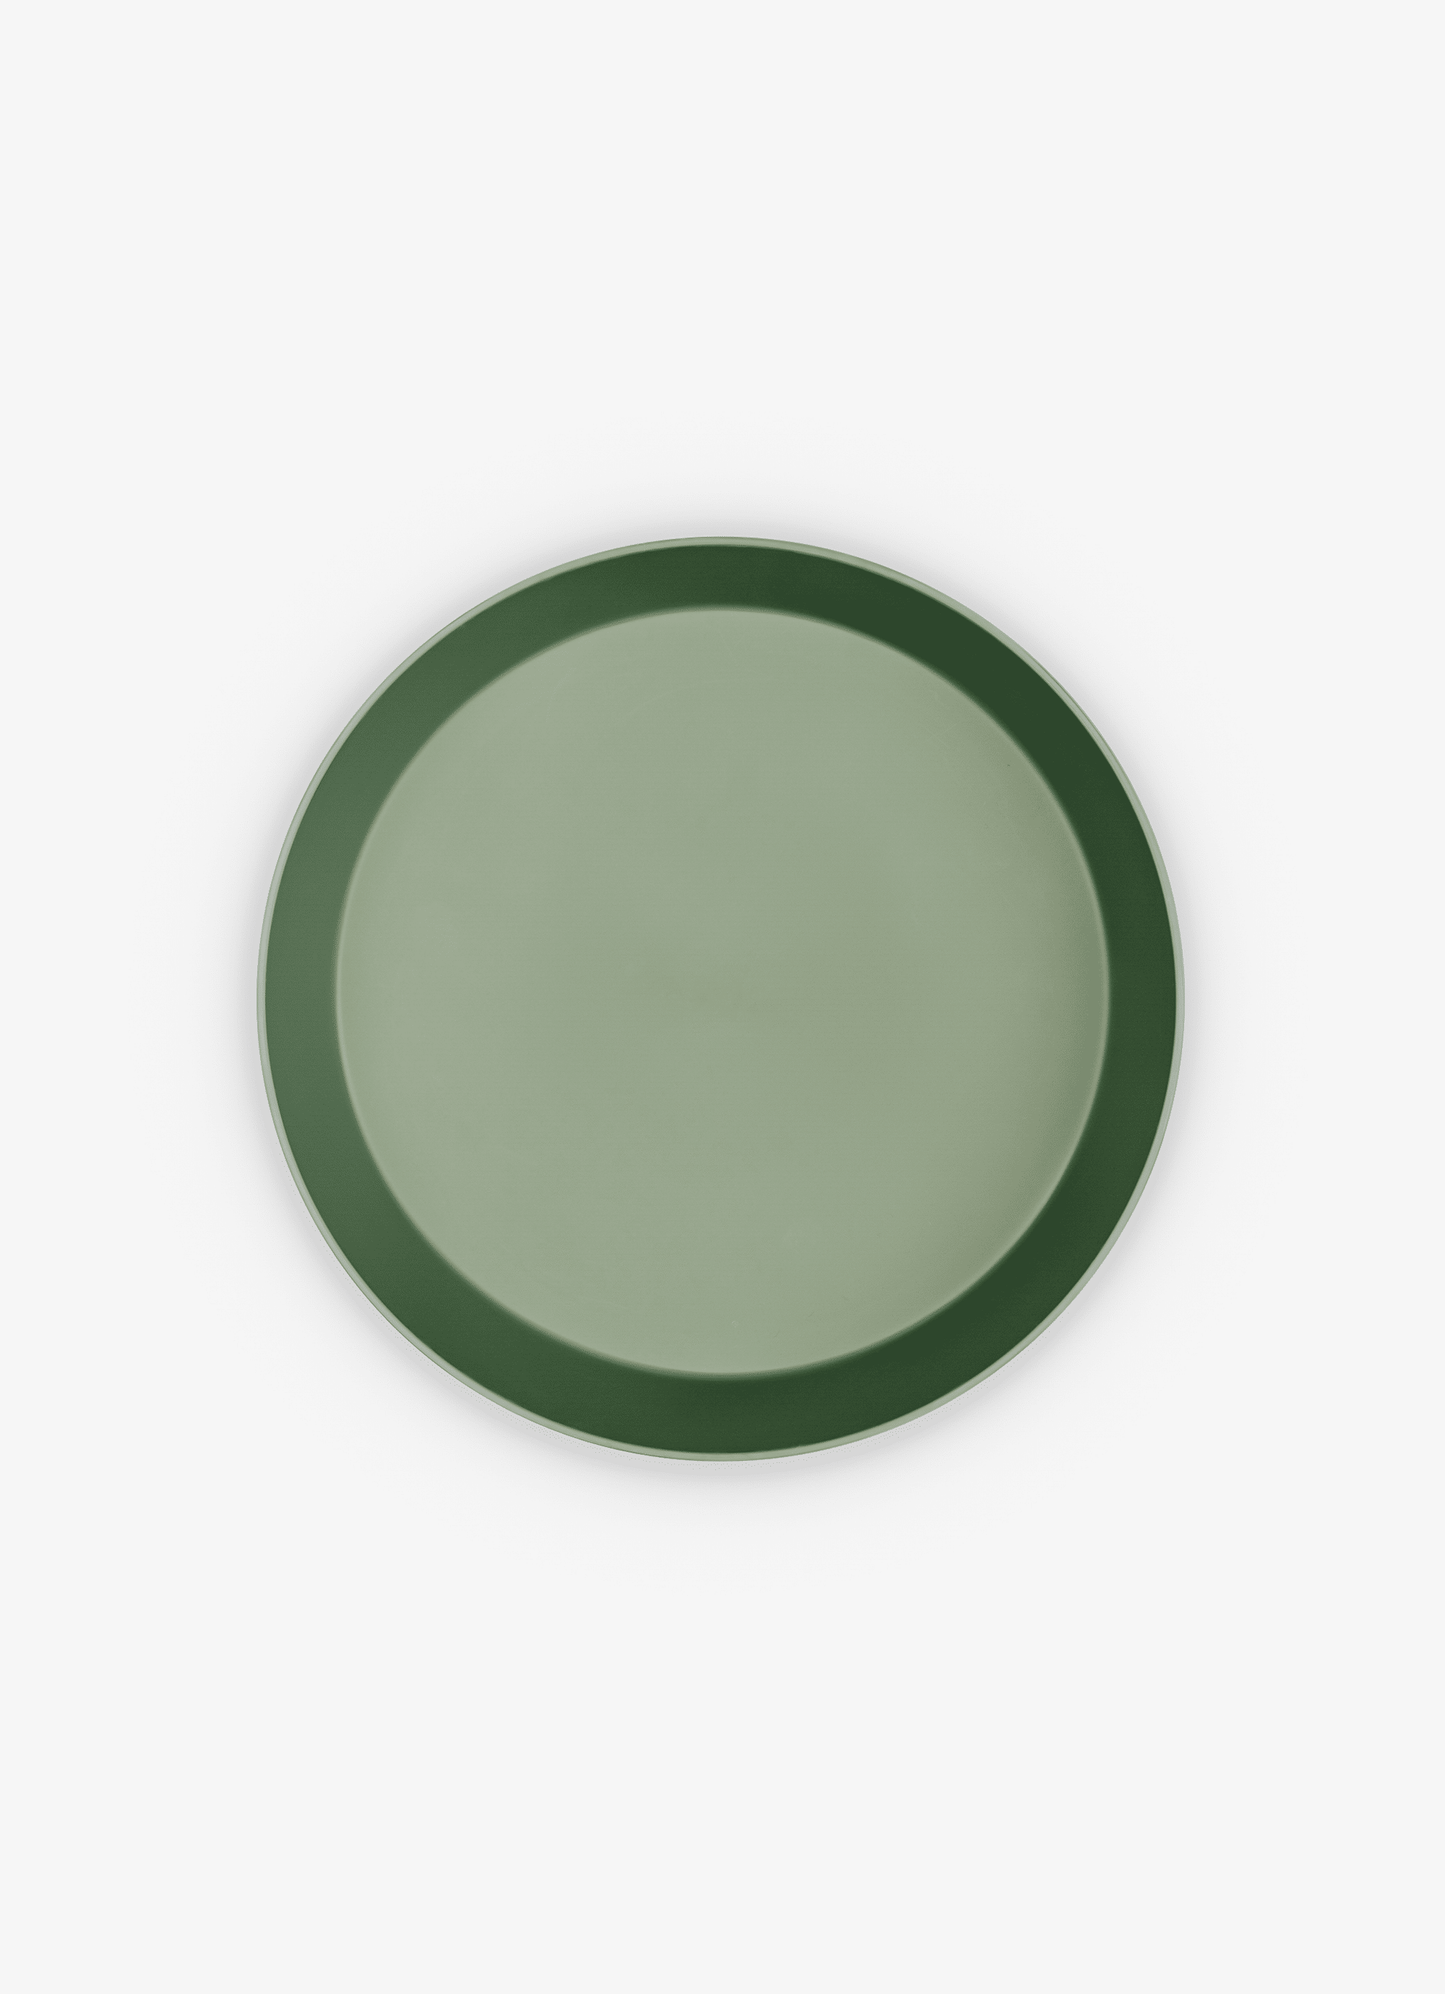 Bio Based Plates - Set of 4 - Green/ Cream